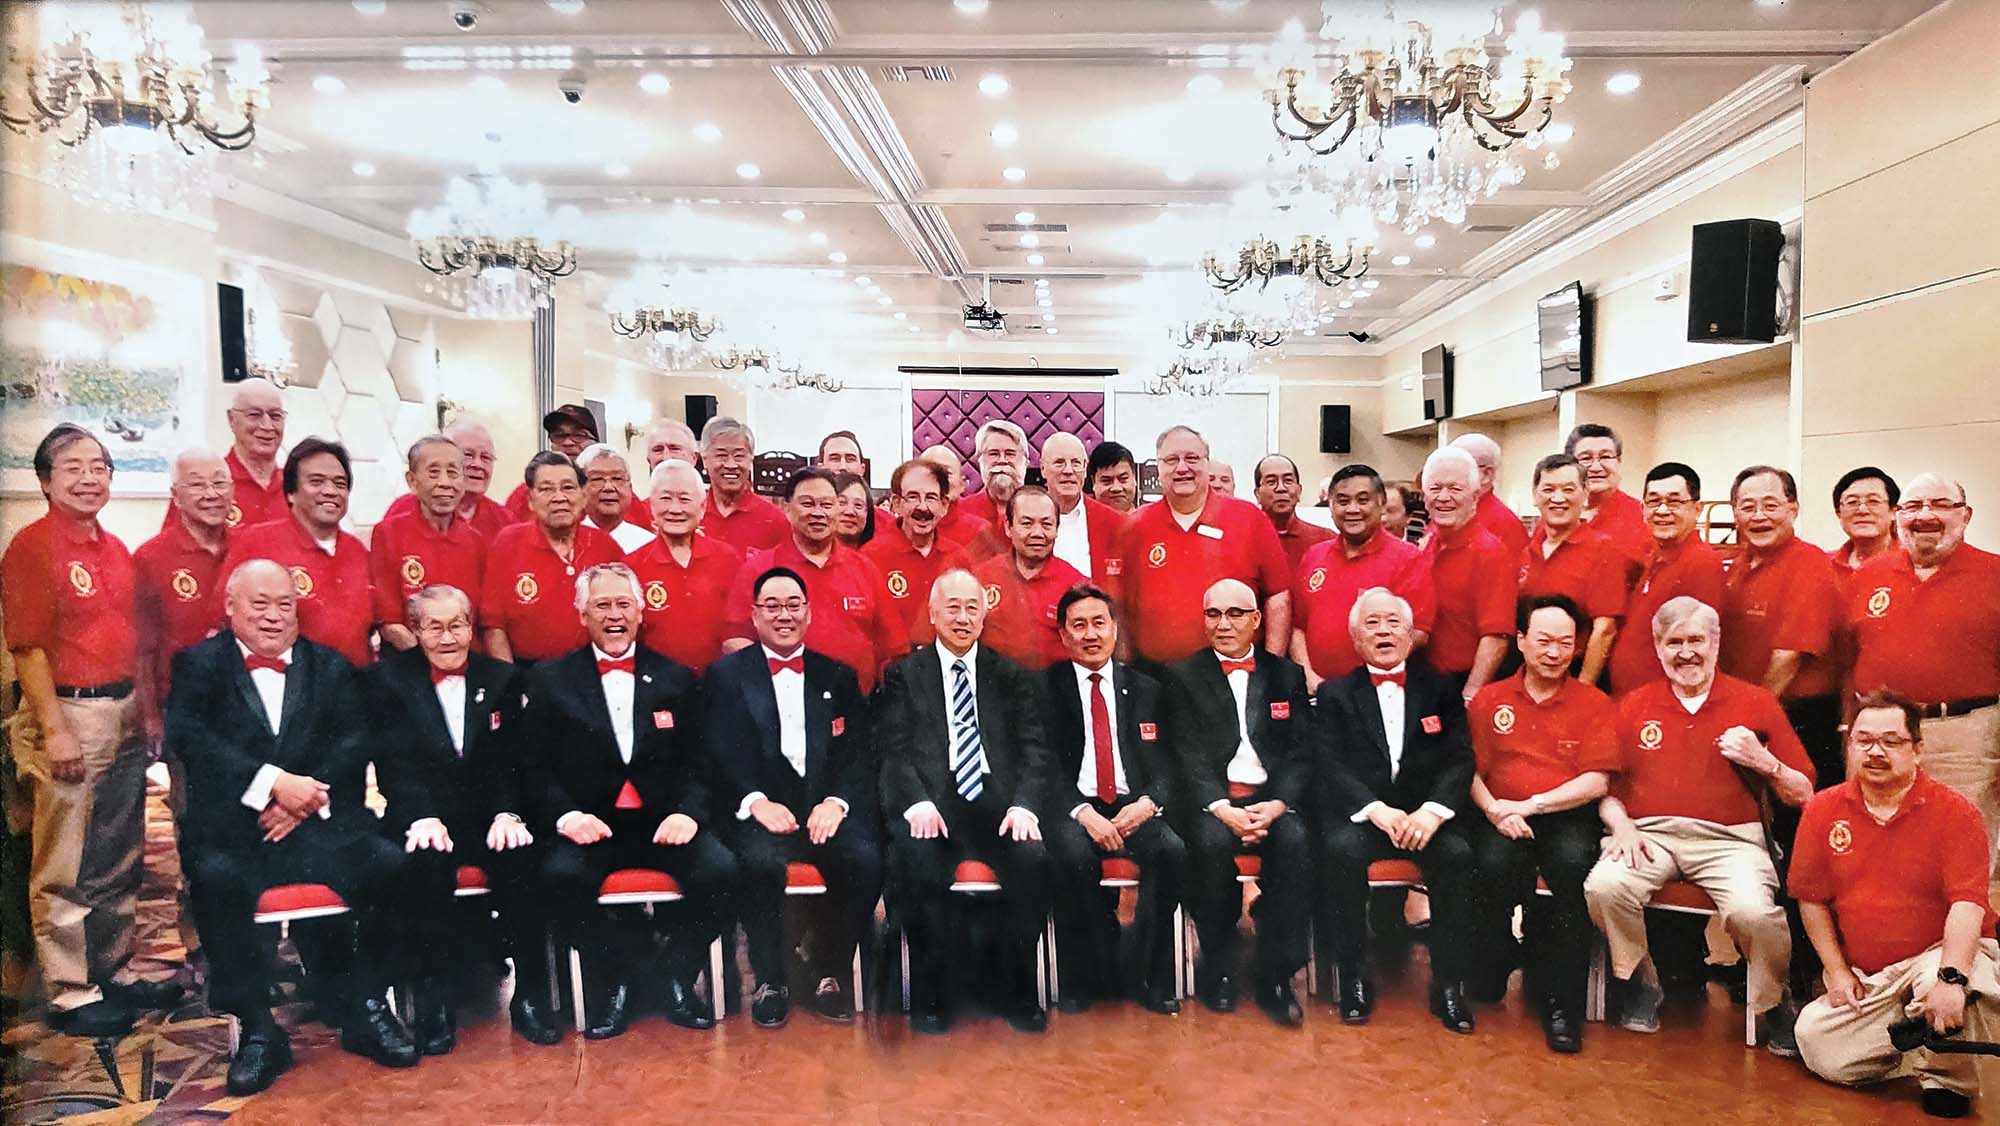 Members of the Chinese Acacia Club